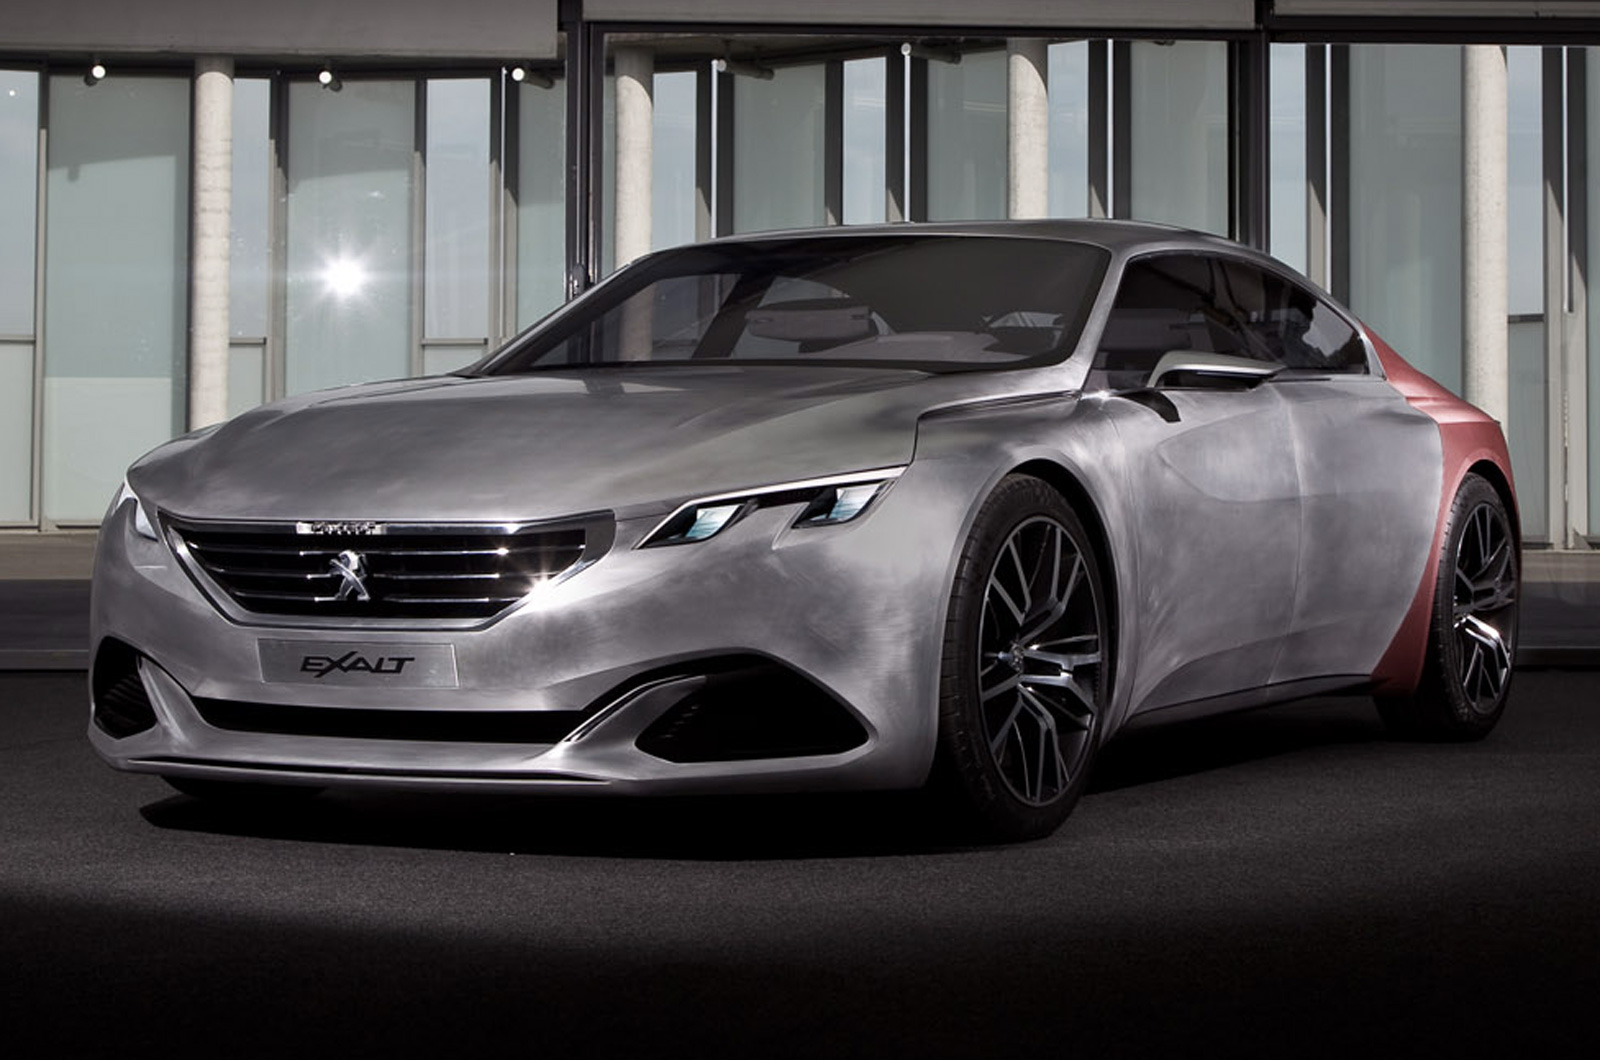 2014 Peugeot Exalt Concept